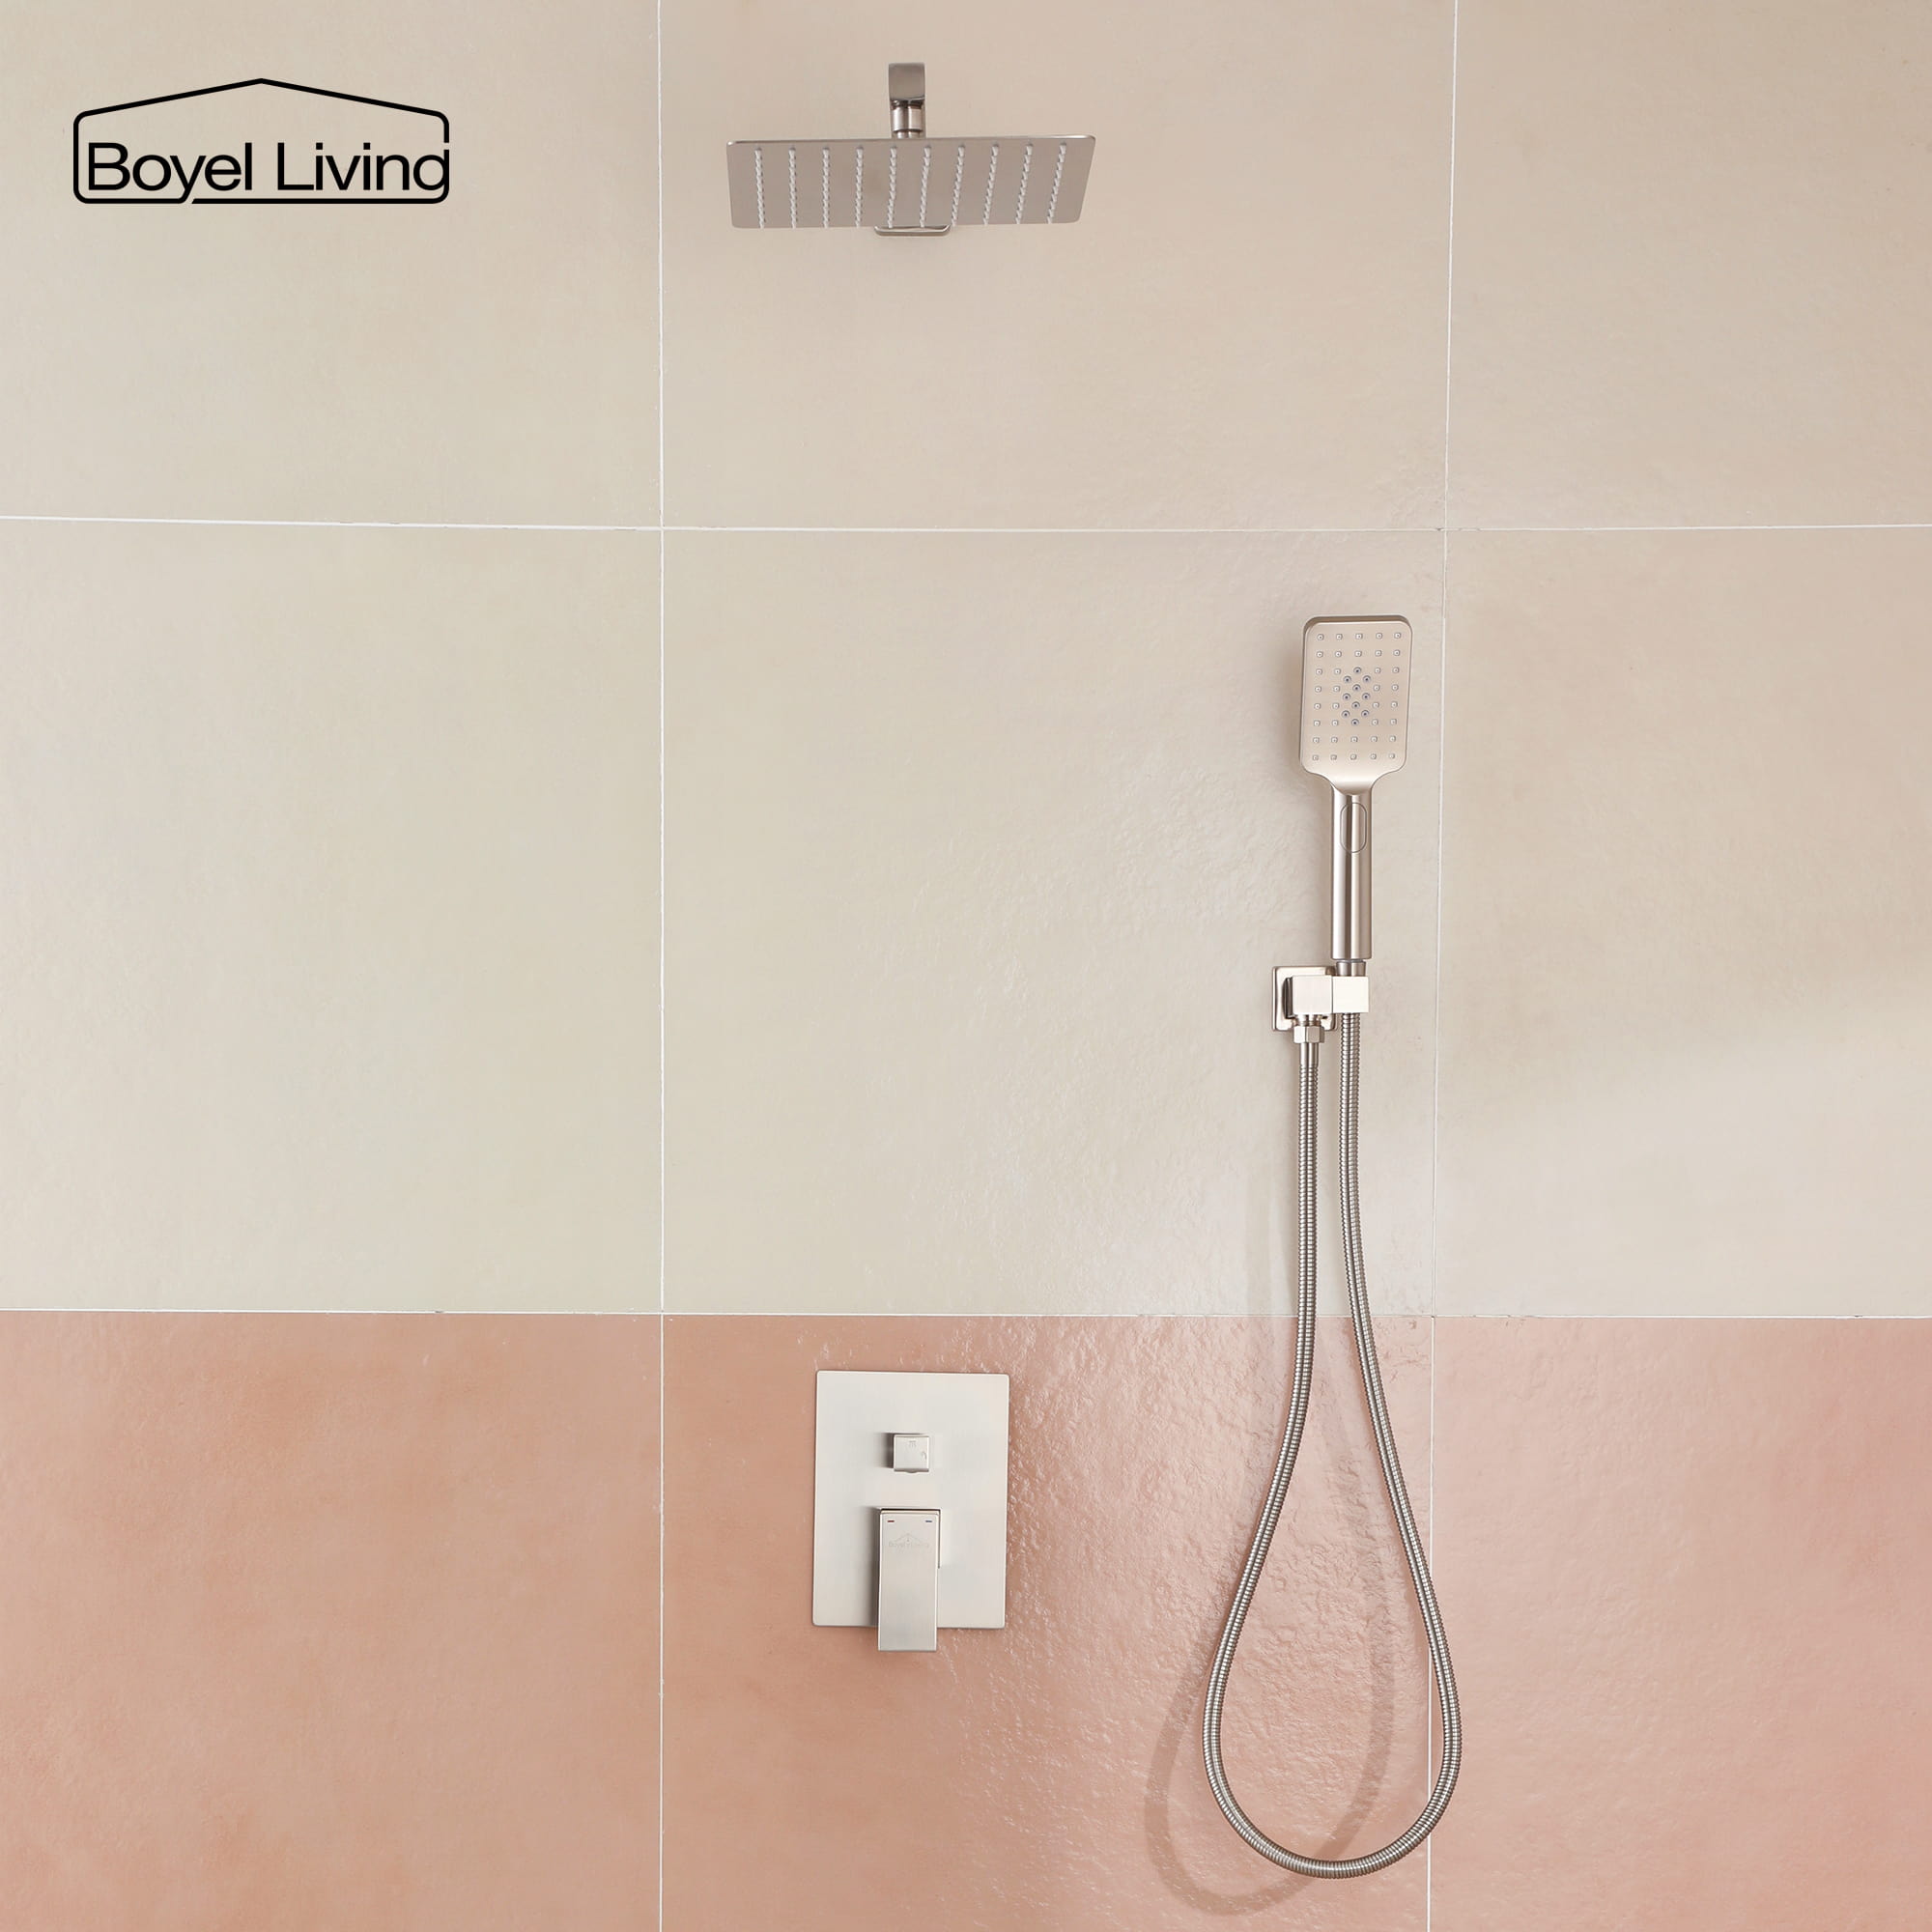 Boyel Living 10 in. 2.5 GPM Wall Mount Rain Dual Shower Heads Shower System in Brushed Nickel/Matte Black-Boyel Living